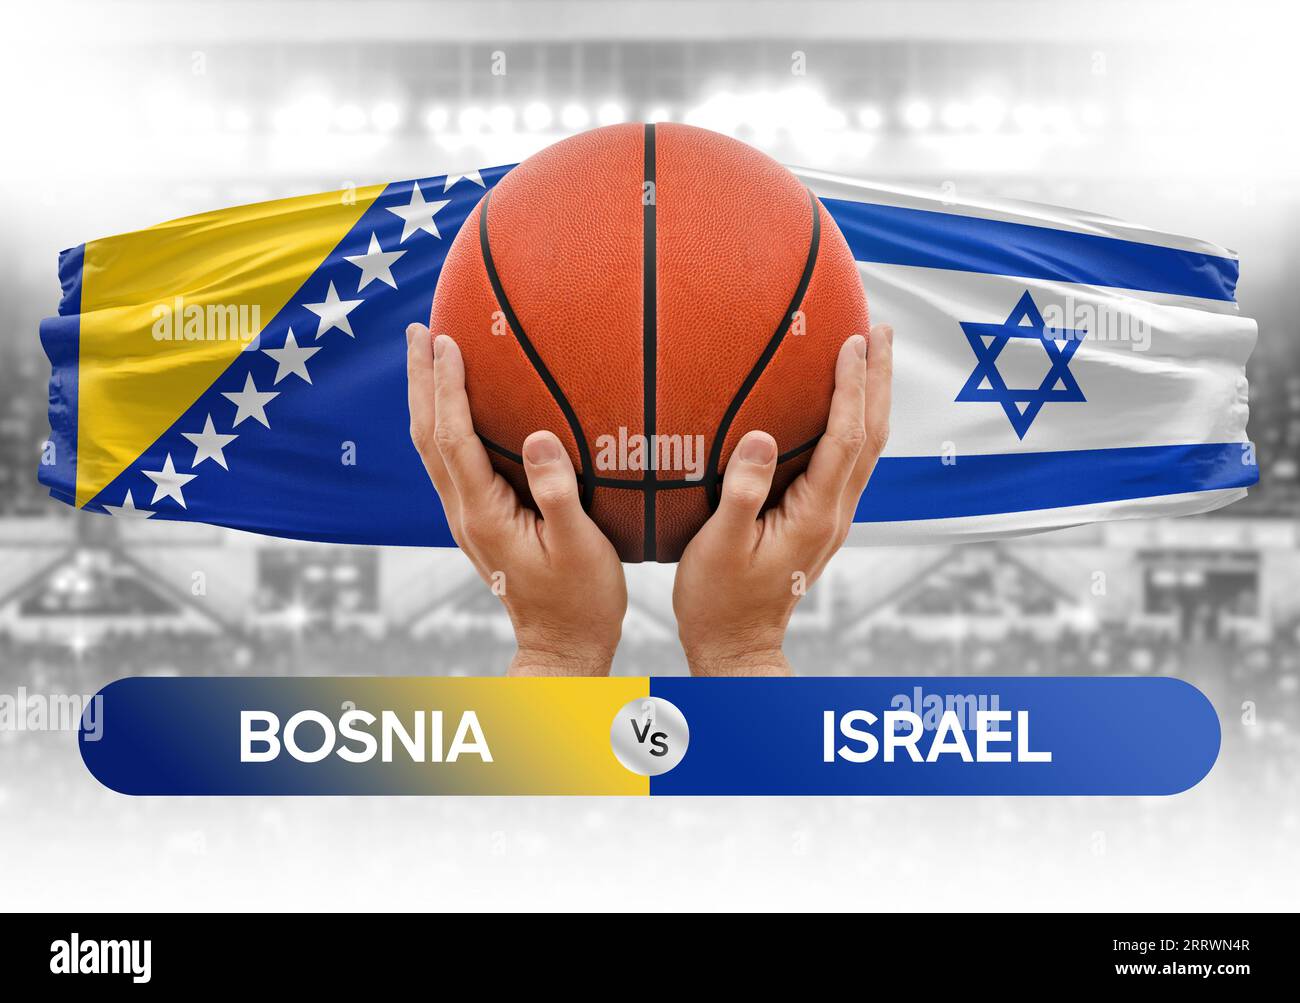 Bosnia vs Israel national basketball teams basket ball match competition  cup concept image Stock Photo - Alamy